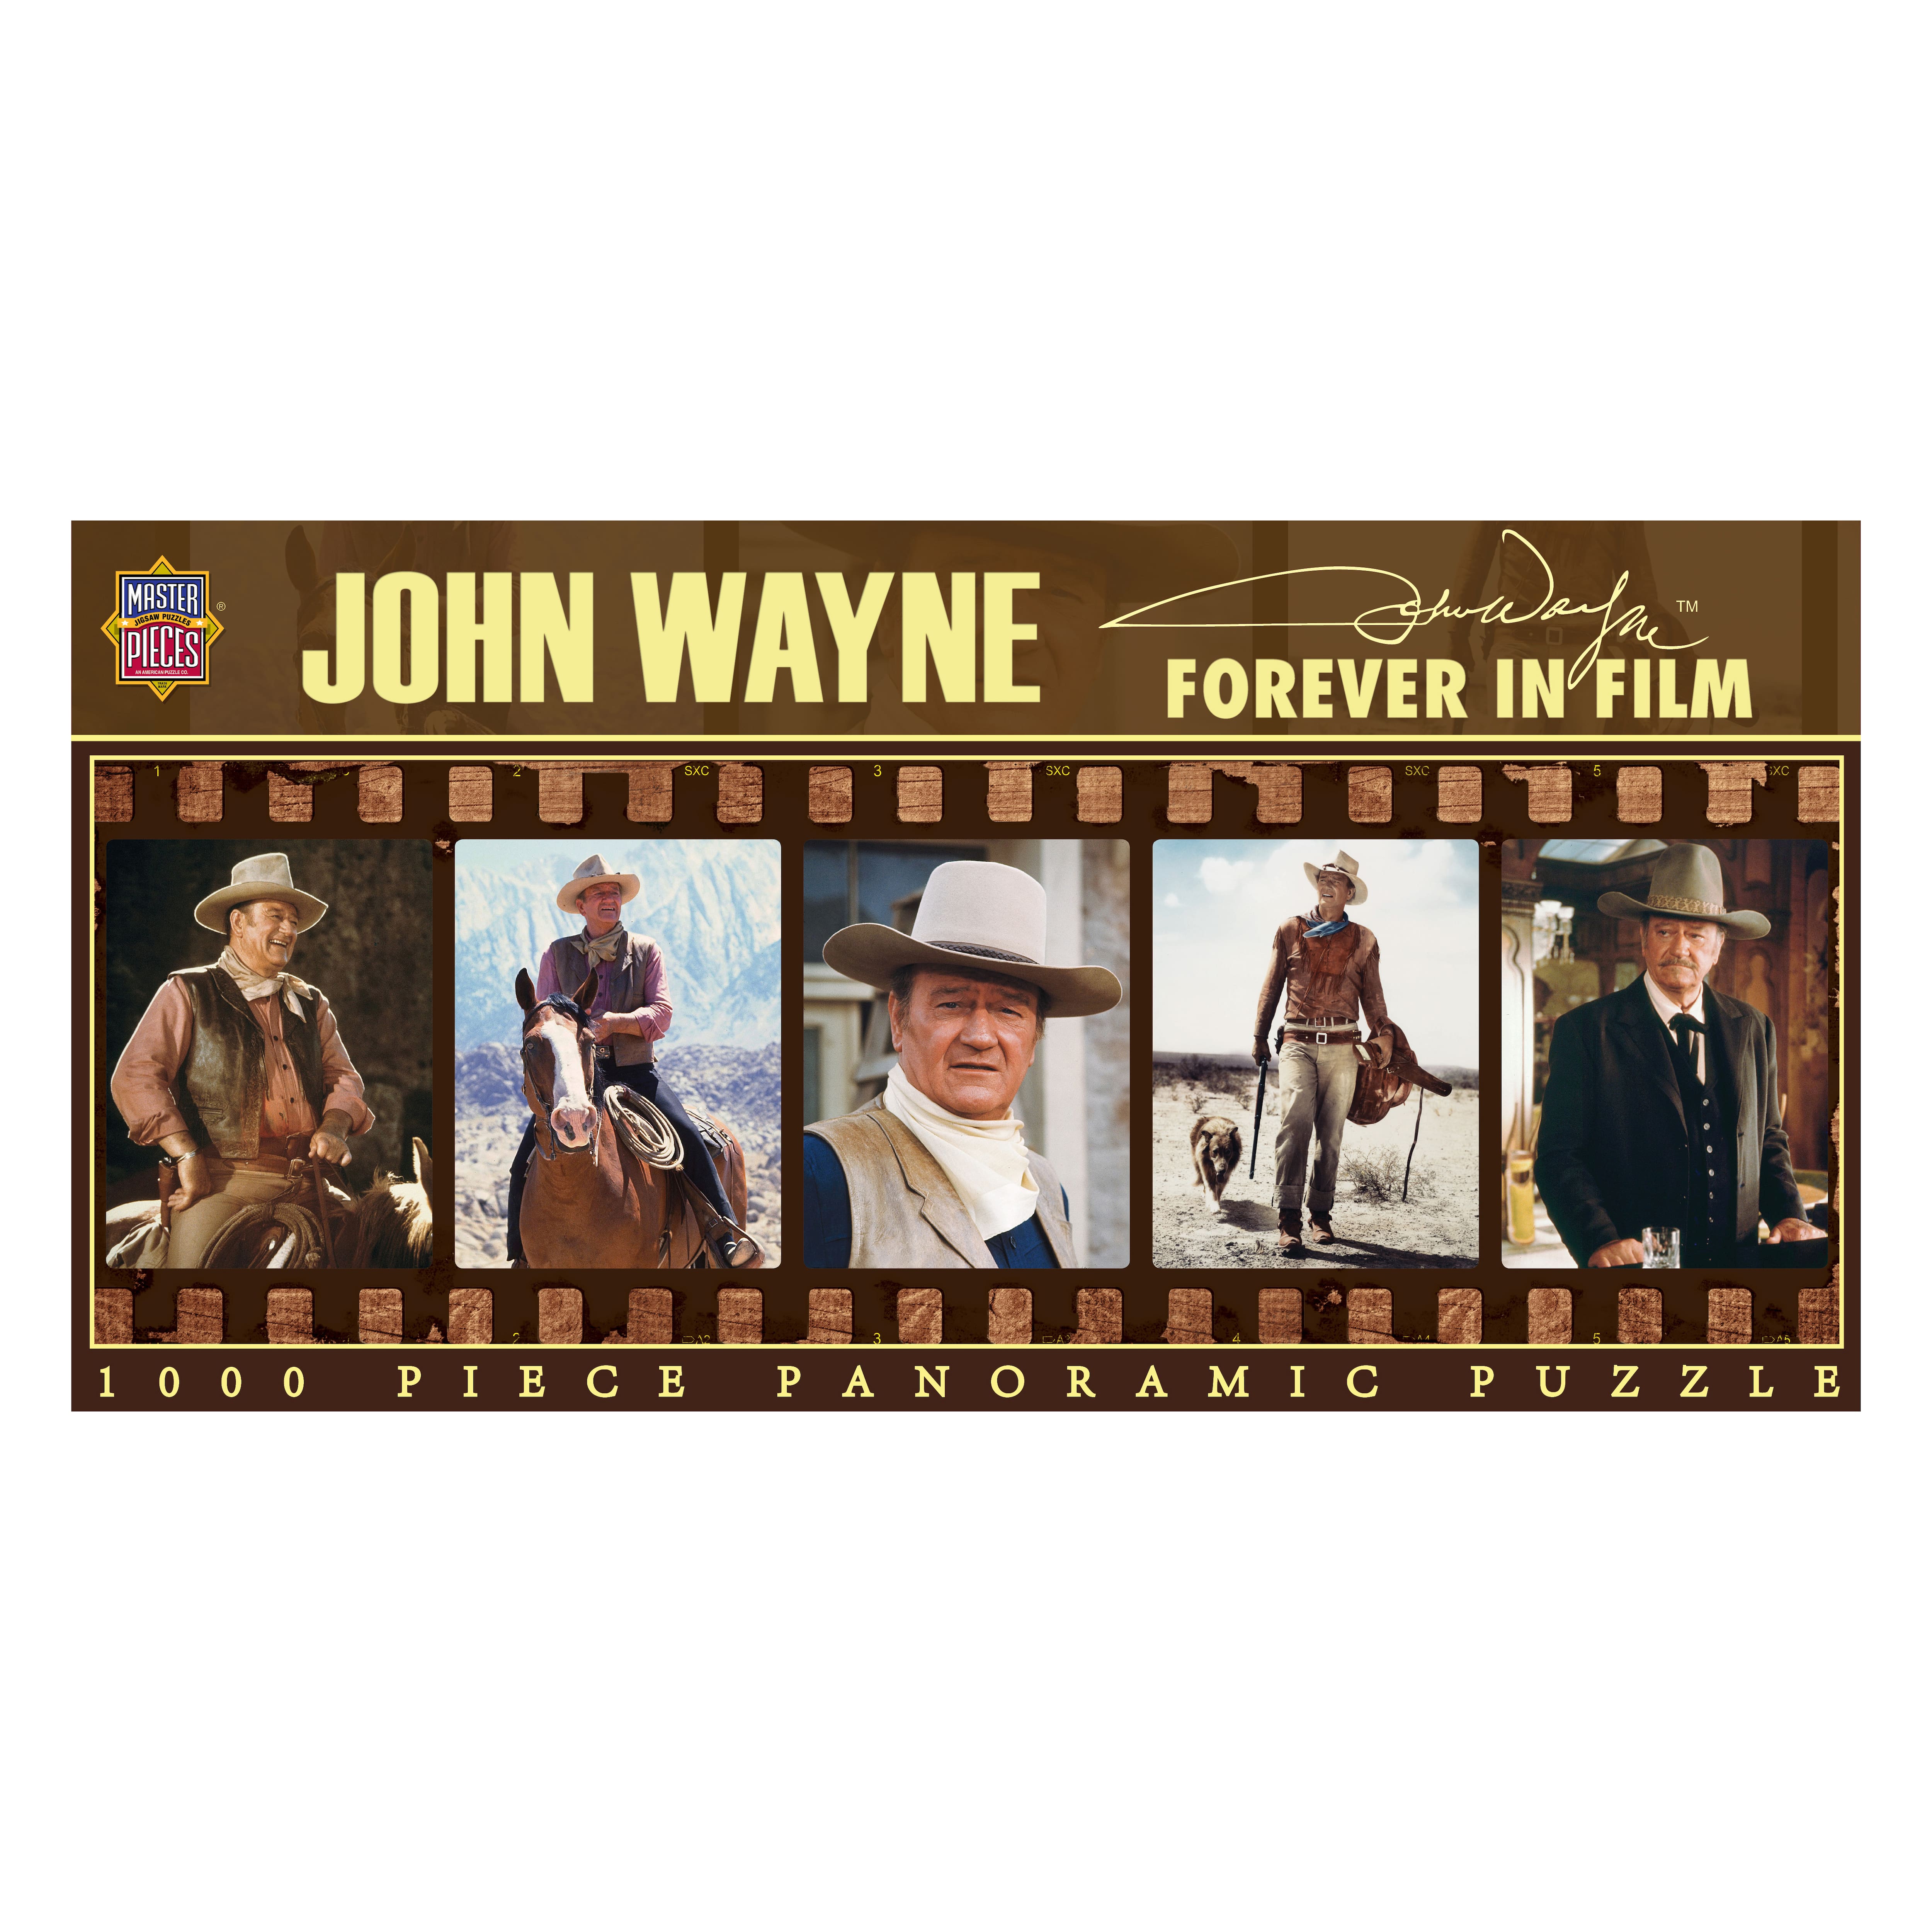 John Wayne Forever in Film Panoramic 1000 Piece Puzzle